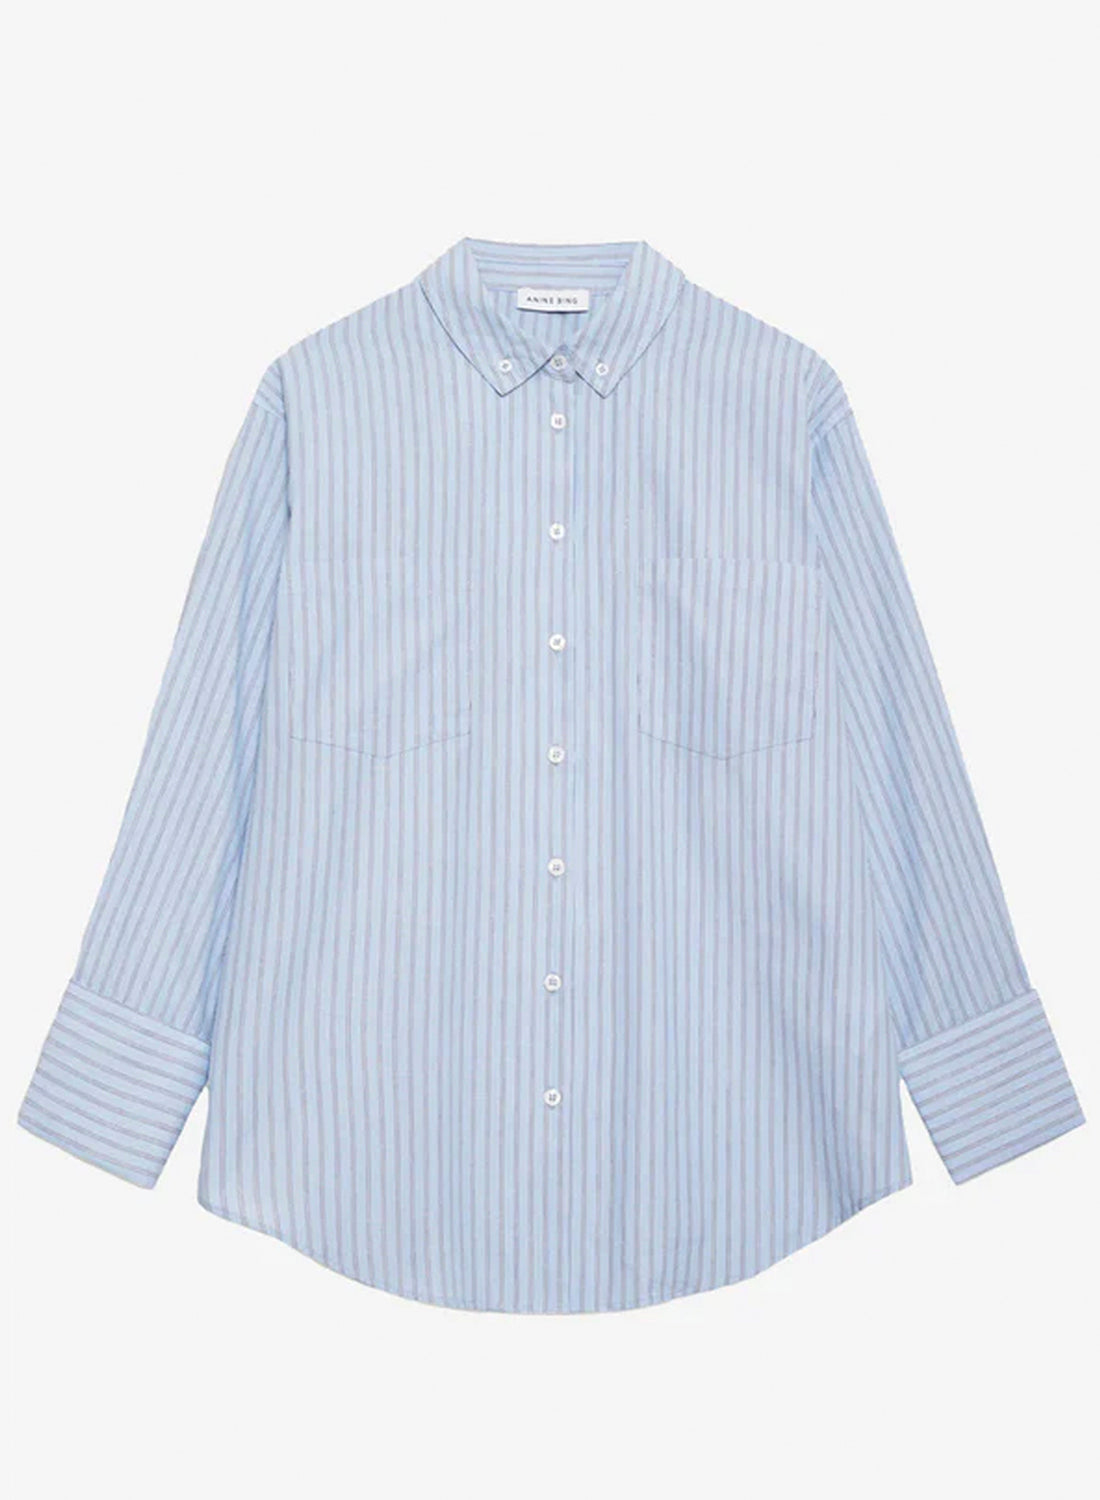 Anine Bing Catherine Shirt Blue And White Stripe